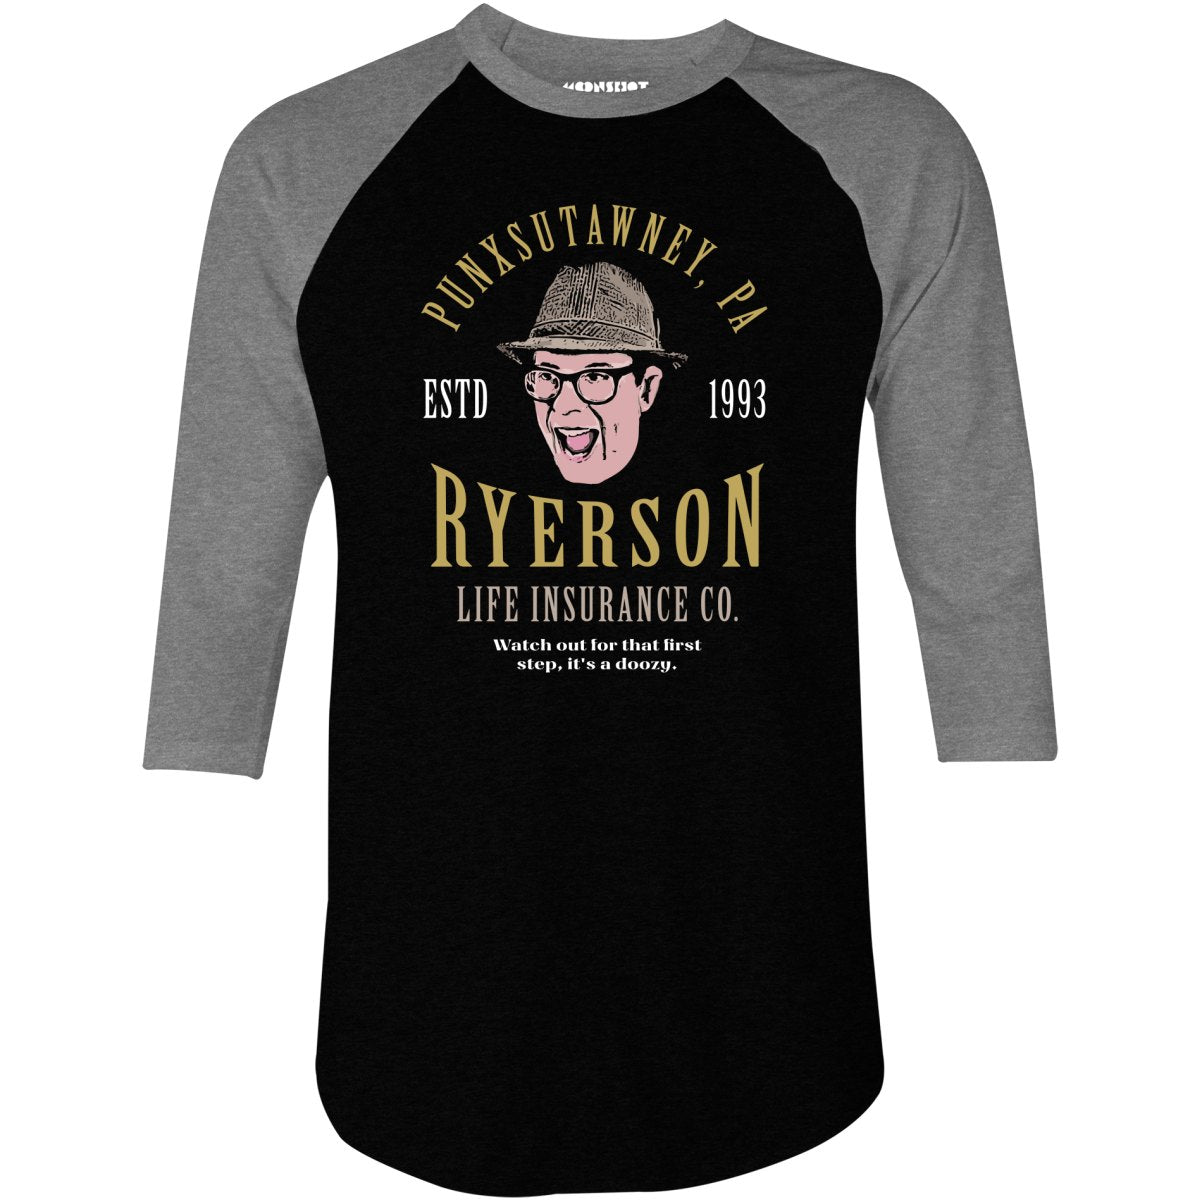 Ned Ryerson Life Insurance Co. - 3/4 Sleeve Raglan T-Shirt